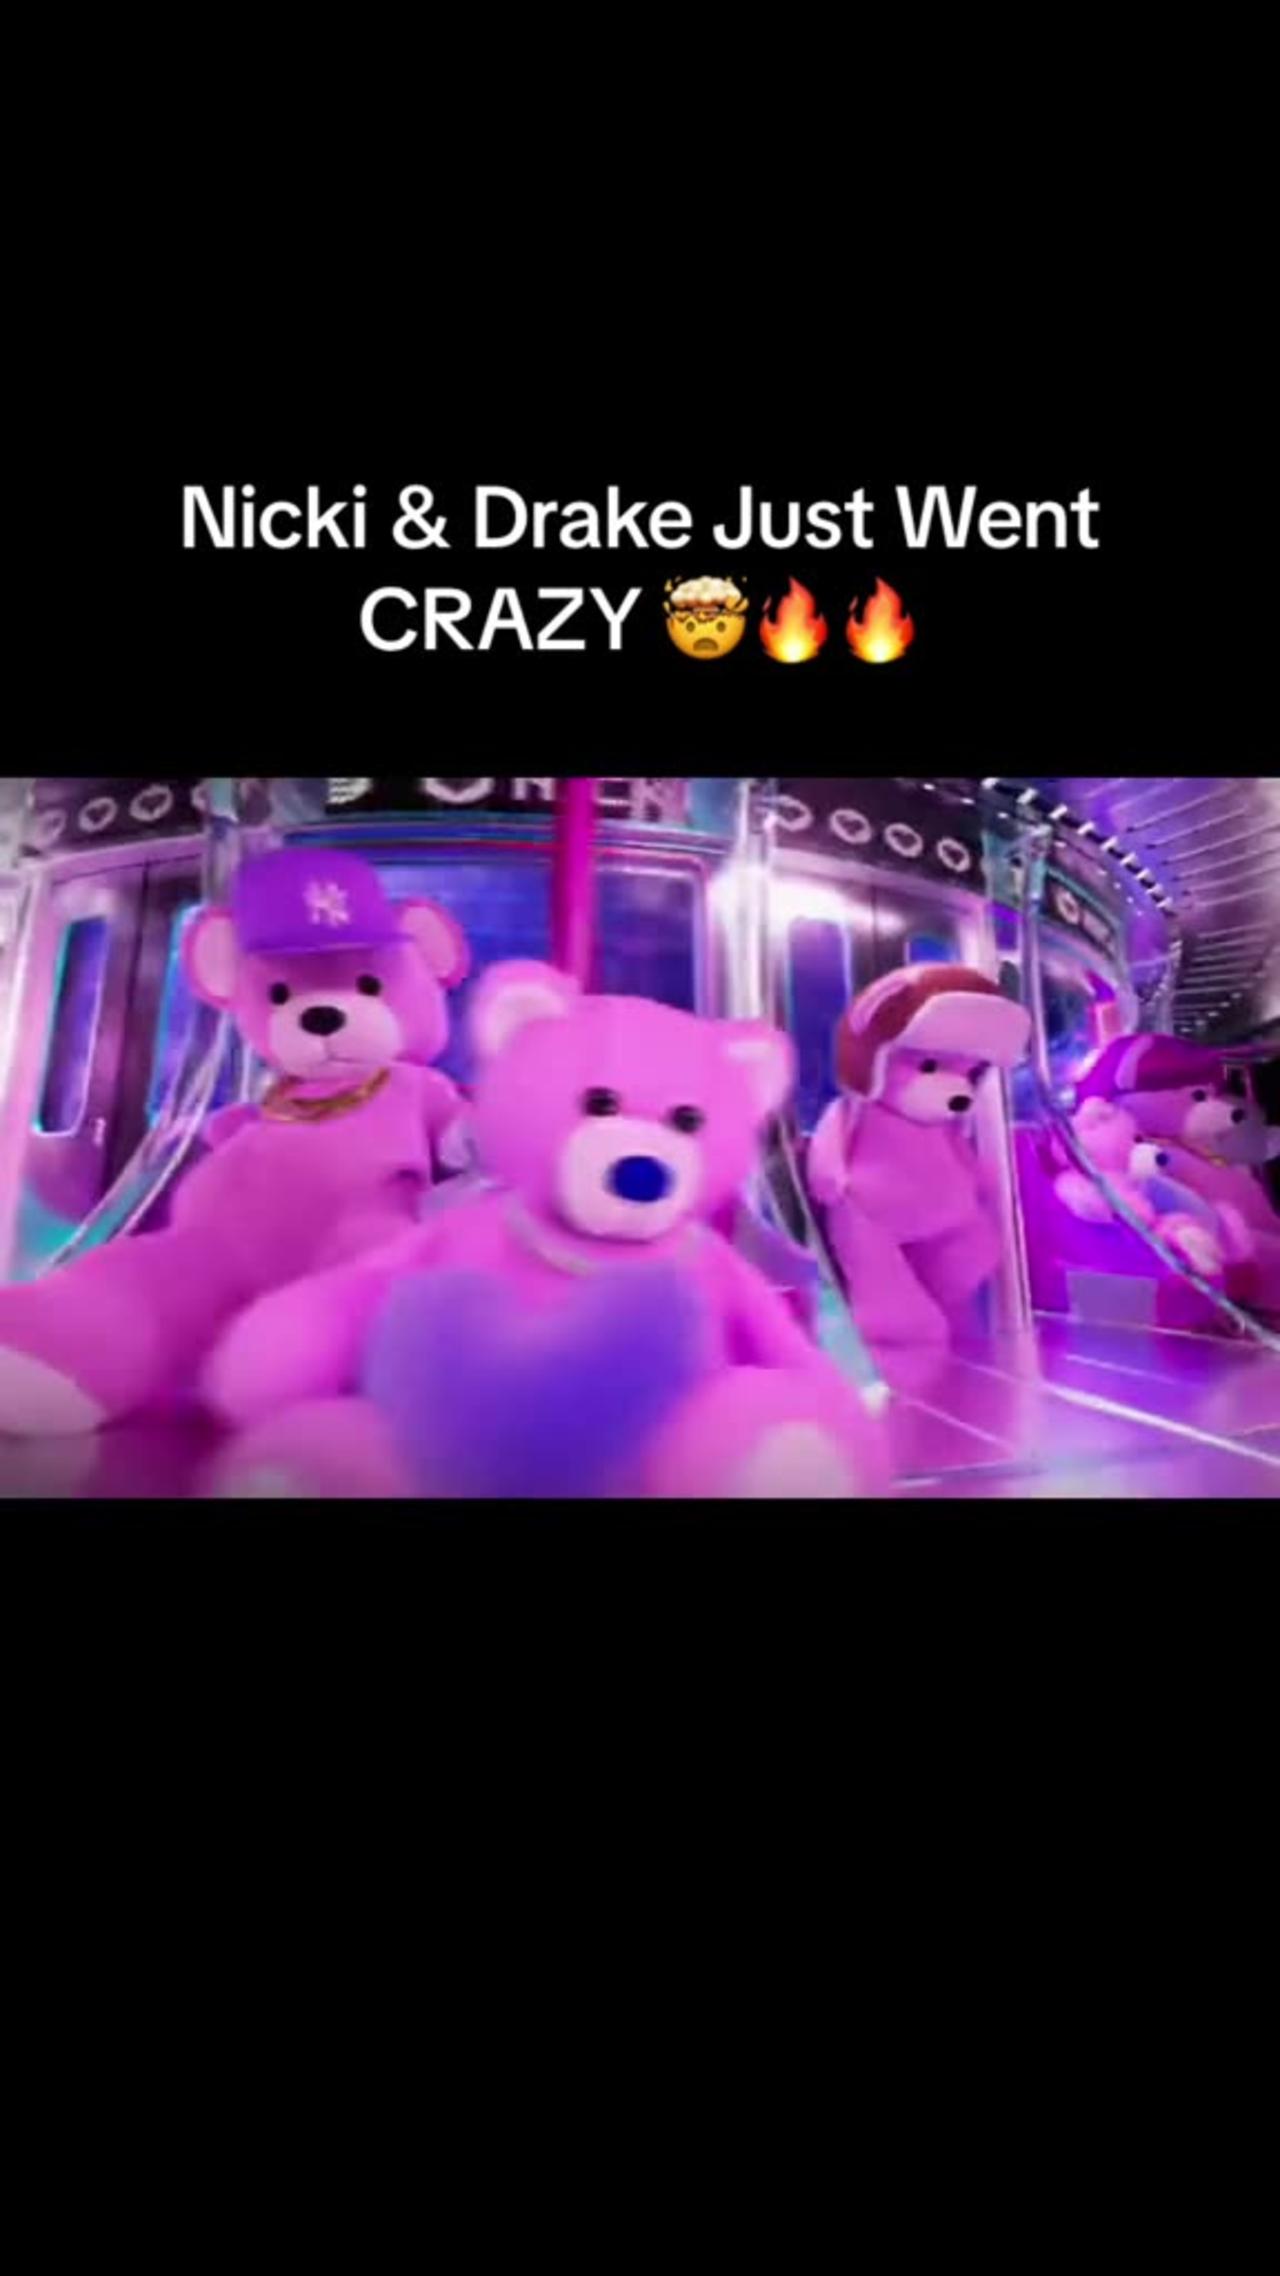 Nicki Minaj Drops Her Long-Awaited Sequel ‘Pink Friday 2’: Stream It Now